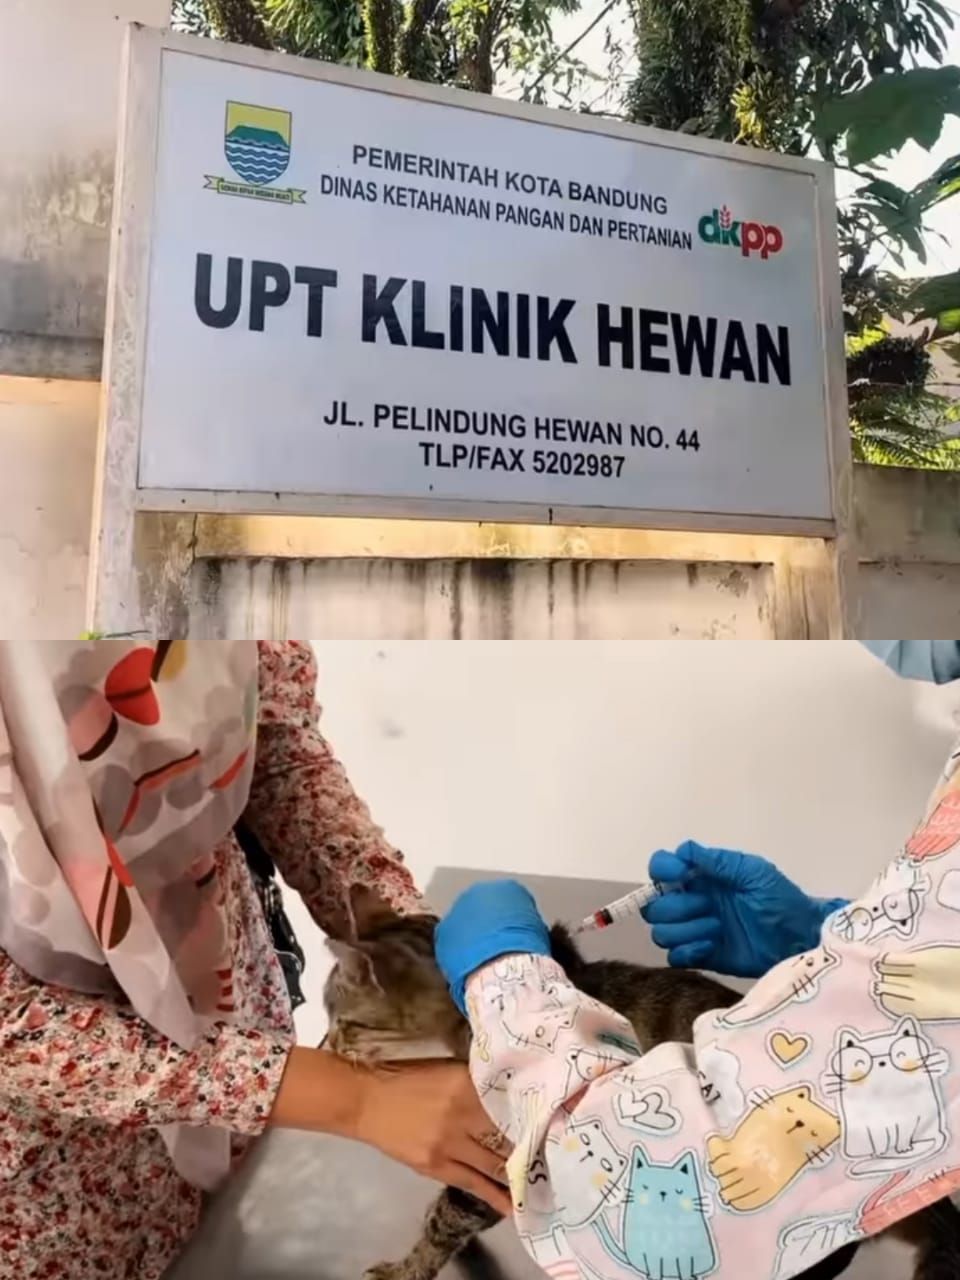 Ilustrasi, Kabar Gembira! Cek Kesehatan di UPTD Klinik Hewan Kota Bandung Digelar Gratis, Berikut Infonya